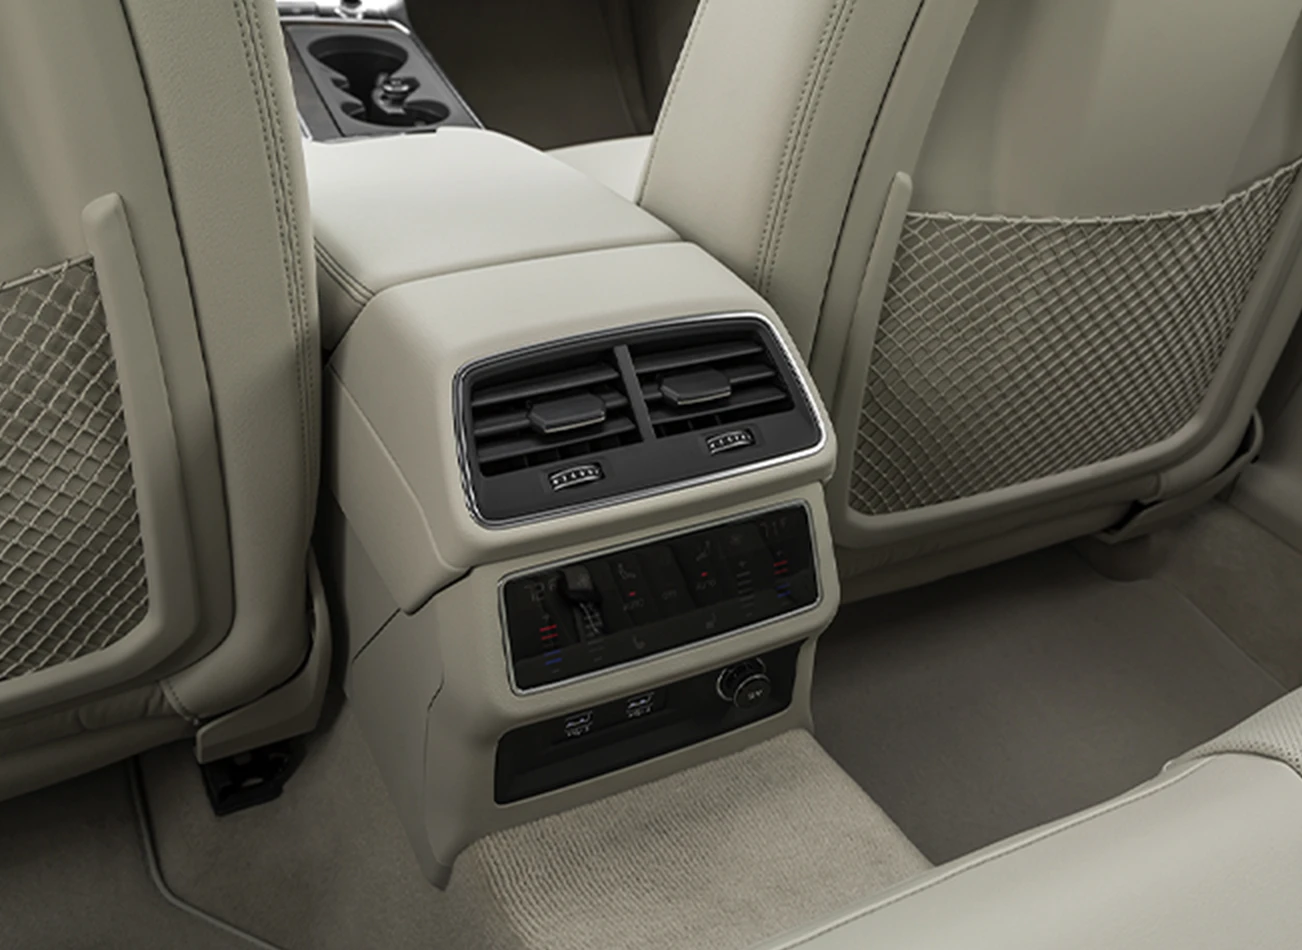 2019 Audi A6: Reviews, Photos, and More: Reasons to Buy #1 | CarMax